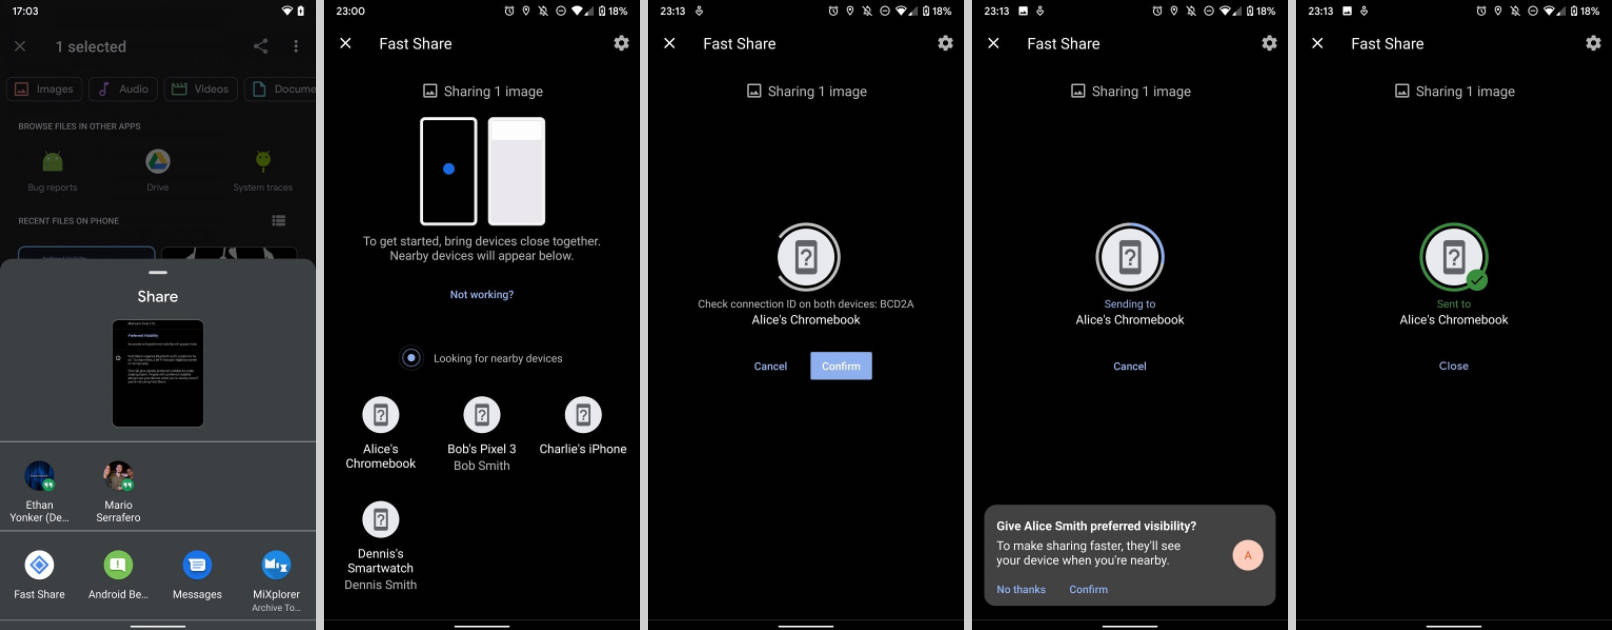 Google Android Beam Fast Share szybkie udostępniane plików jak Apple AirDrop